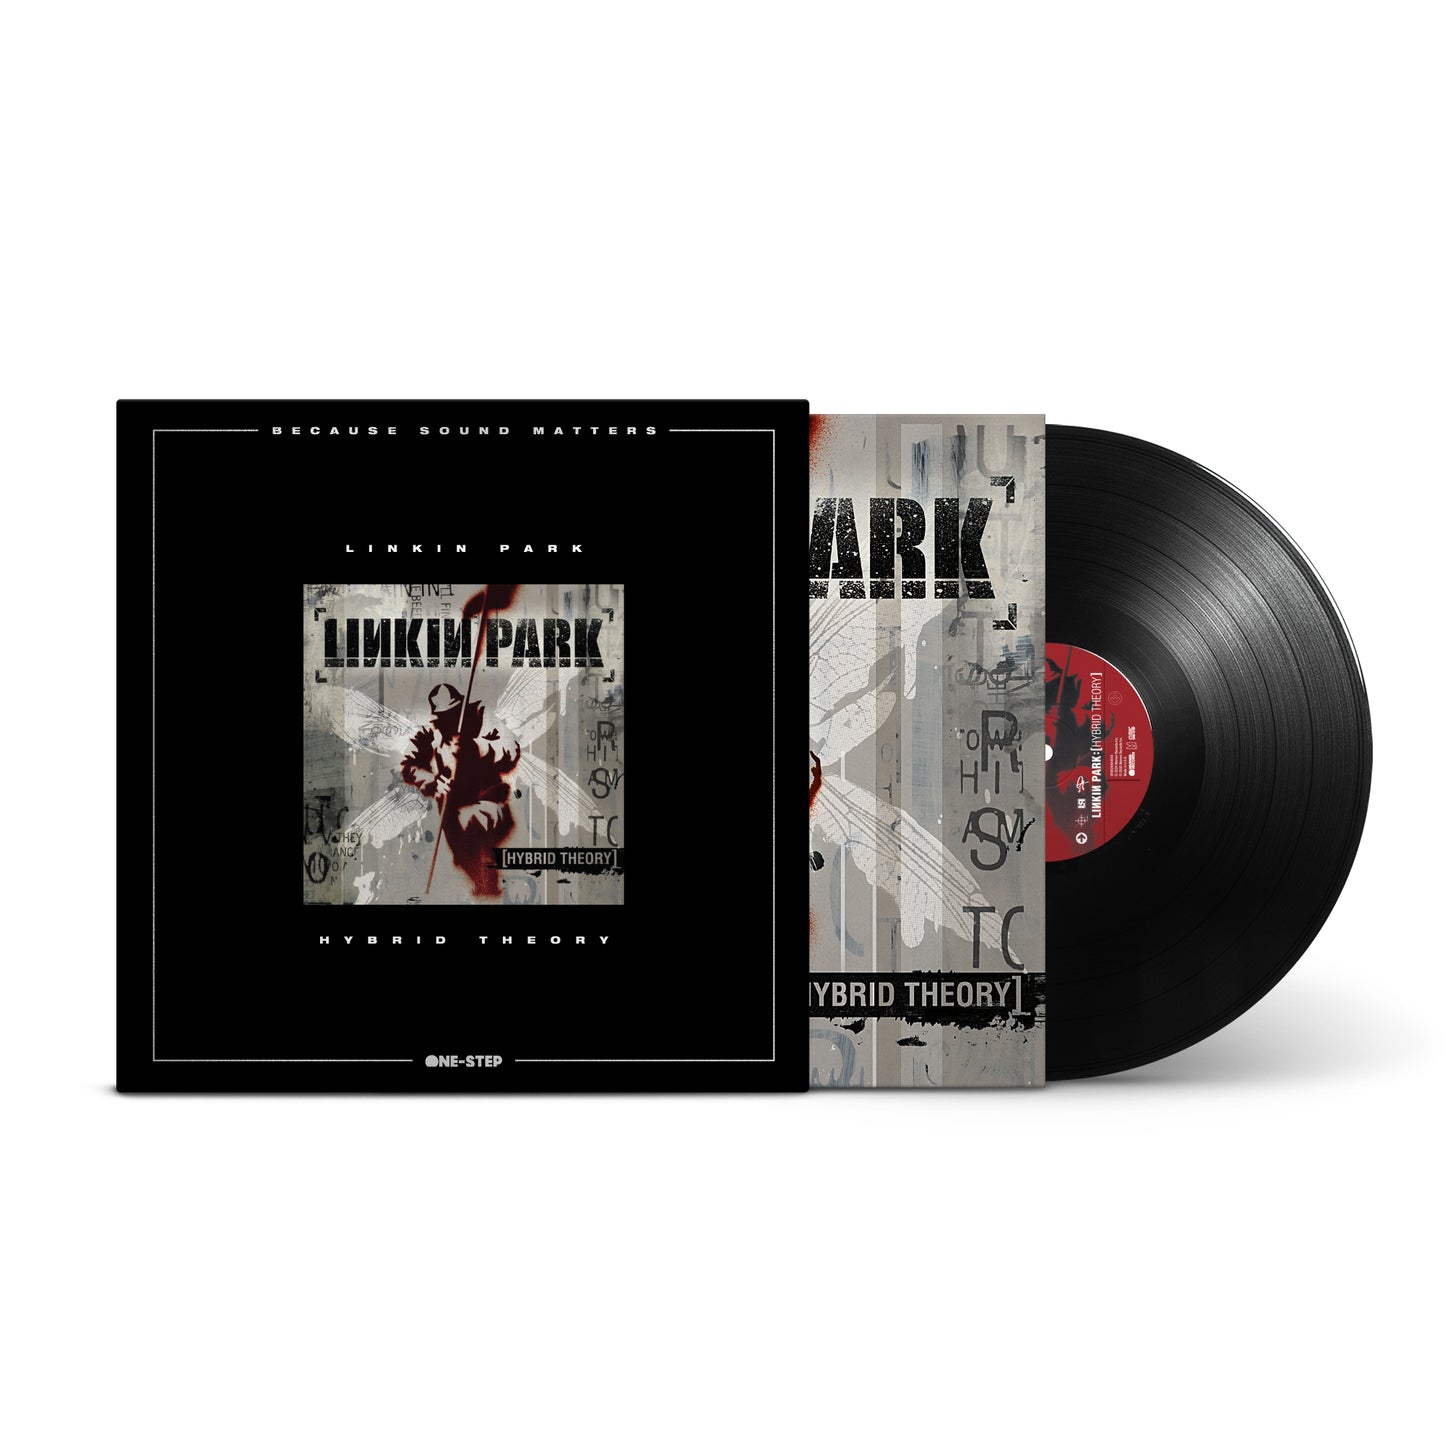 Linkin Park - Hybrid Theory - One-Step Vinyl LP